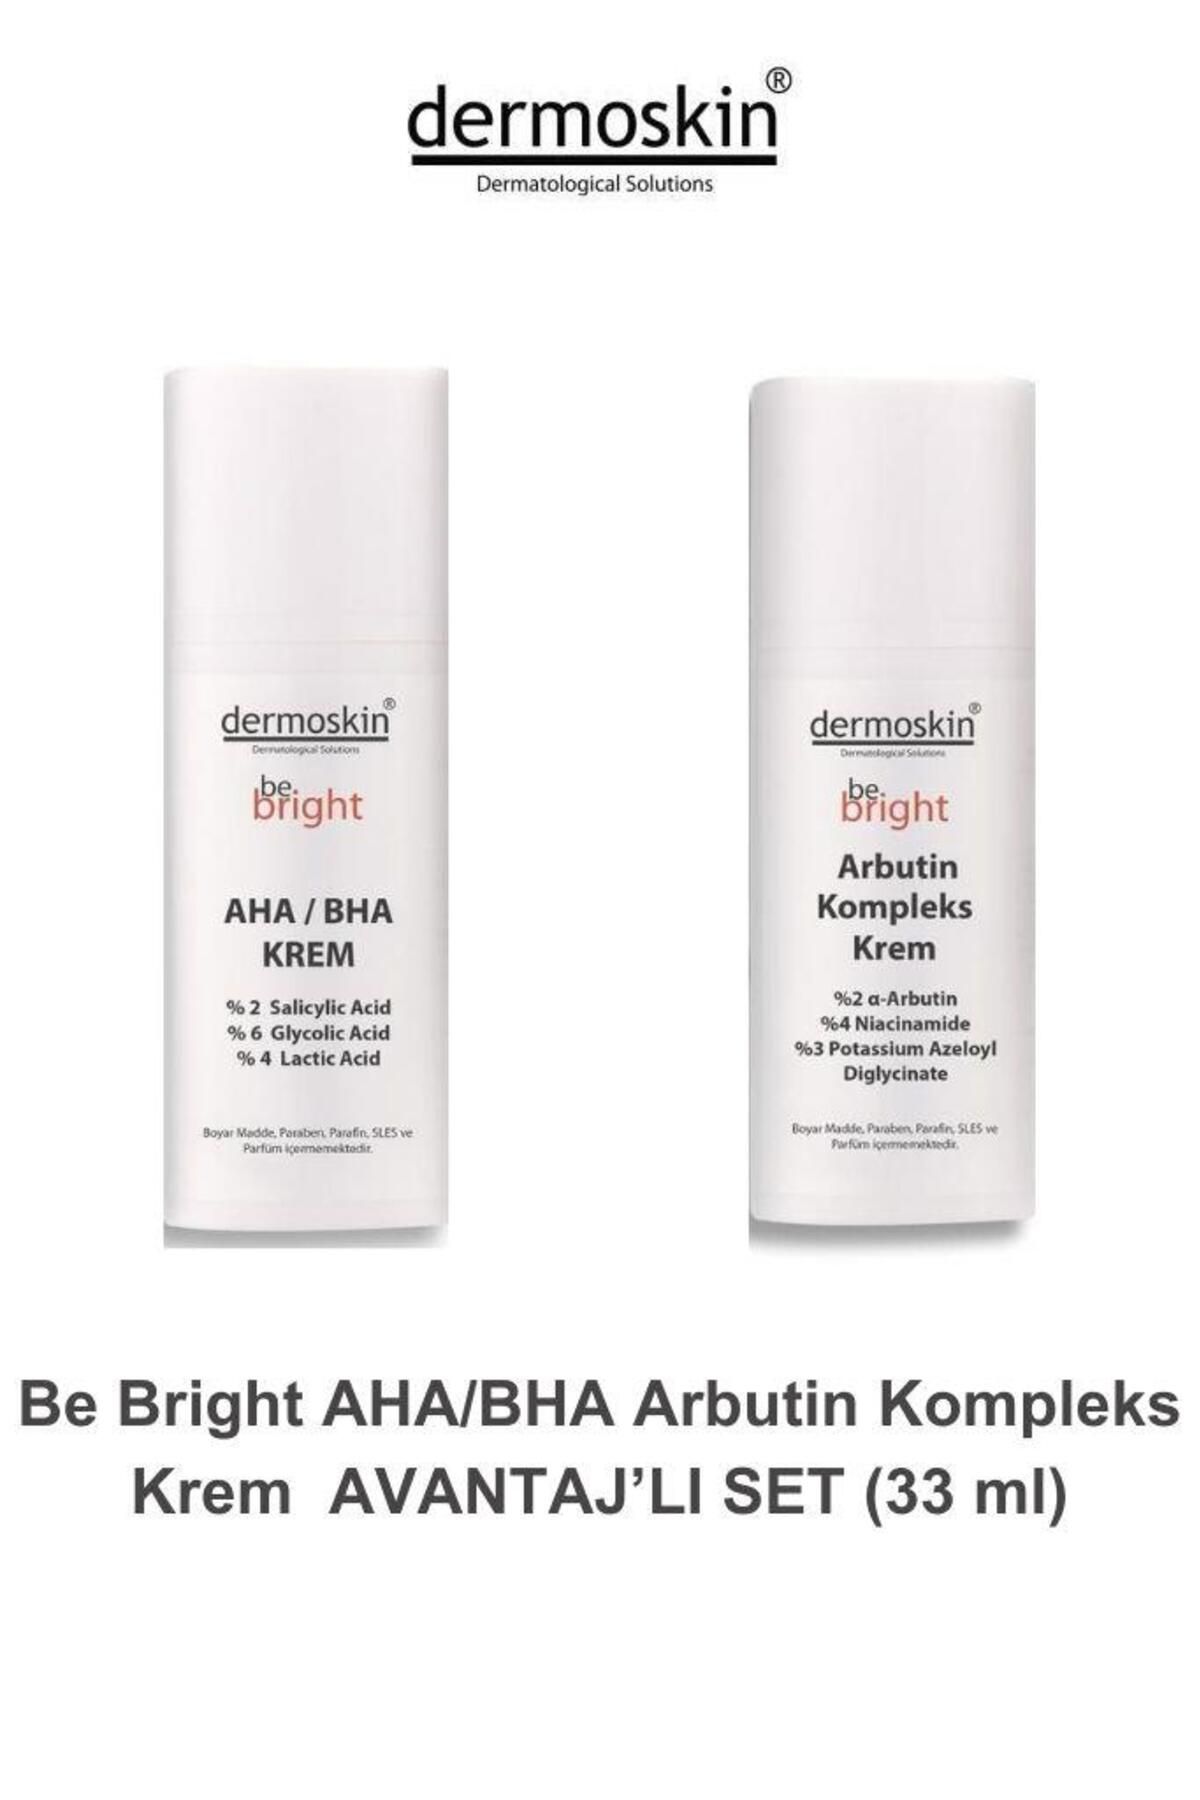 Dermoskin Be Bright Arbutin Kompleks Cream & AHA/BHA Cream 33 ml